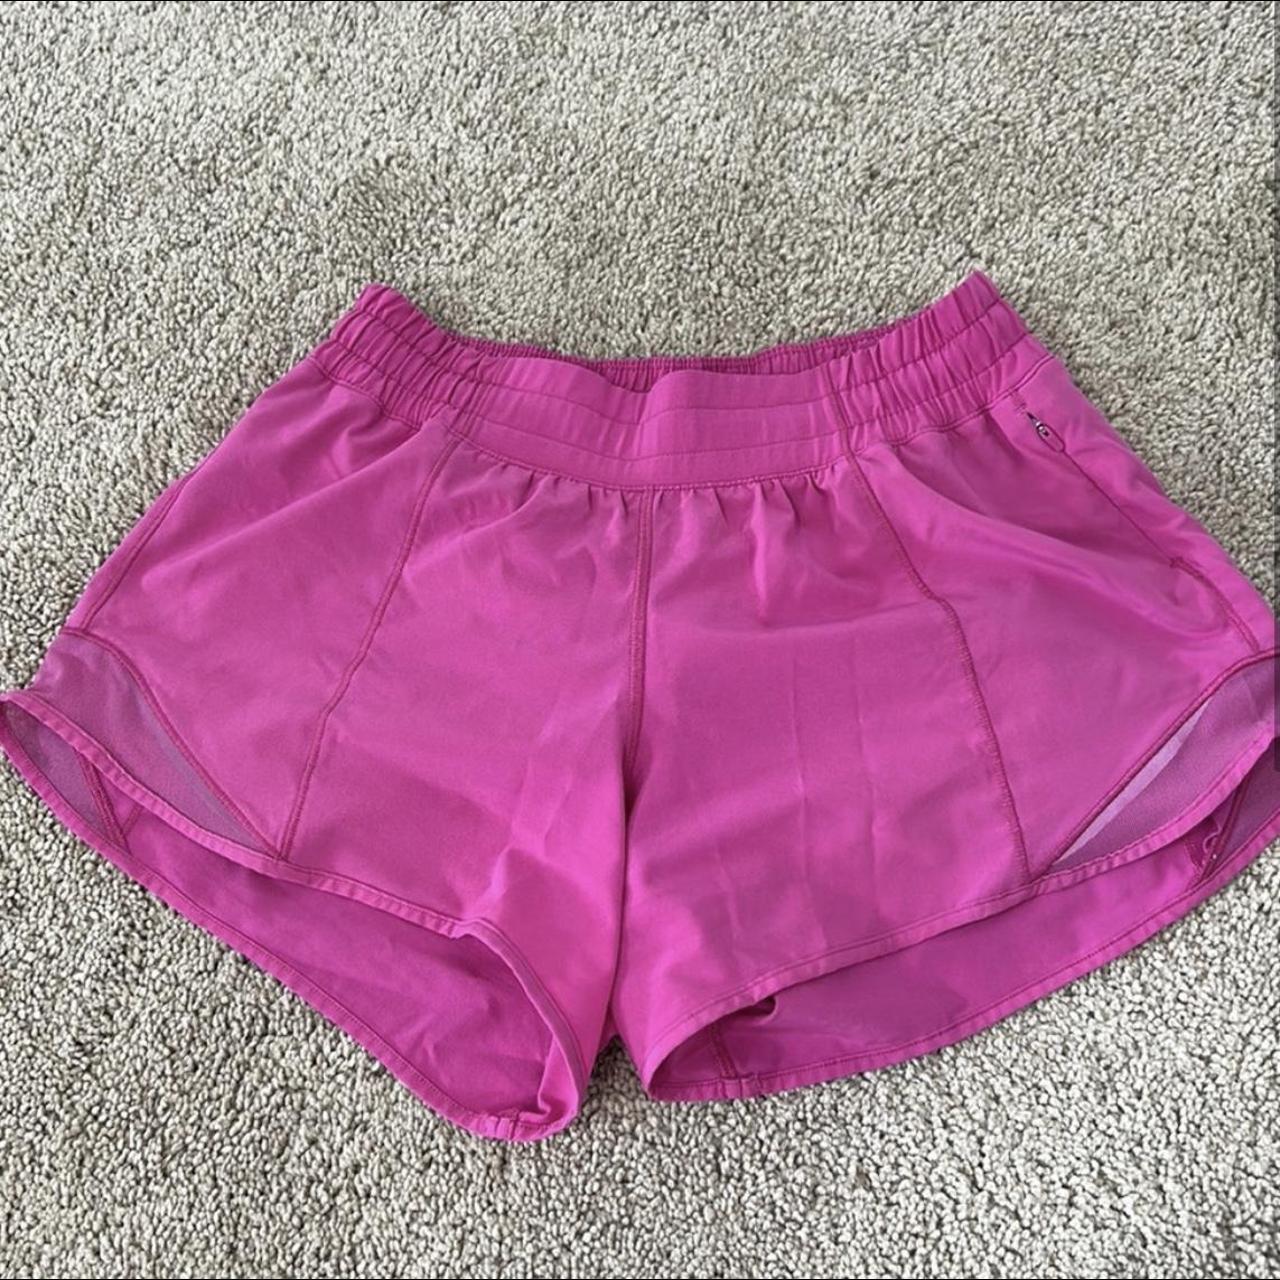 Lululemon Hotty Hot Sonic Pink Shorts 4 - Depop